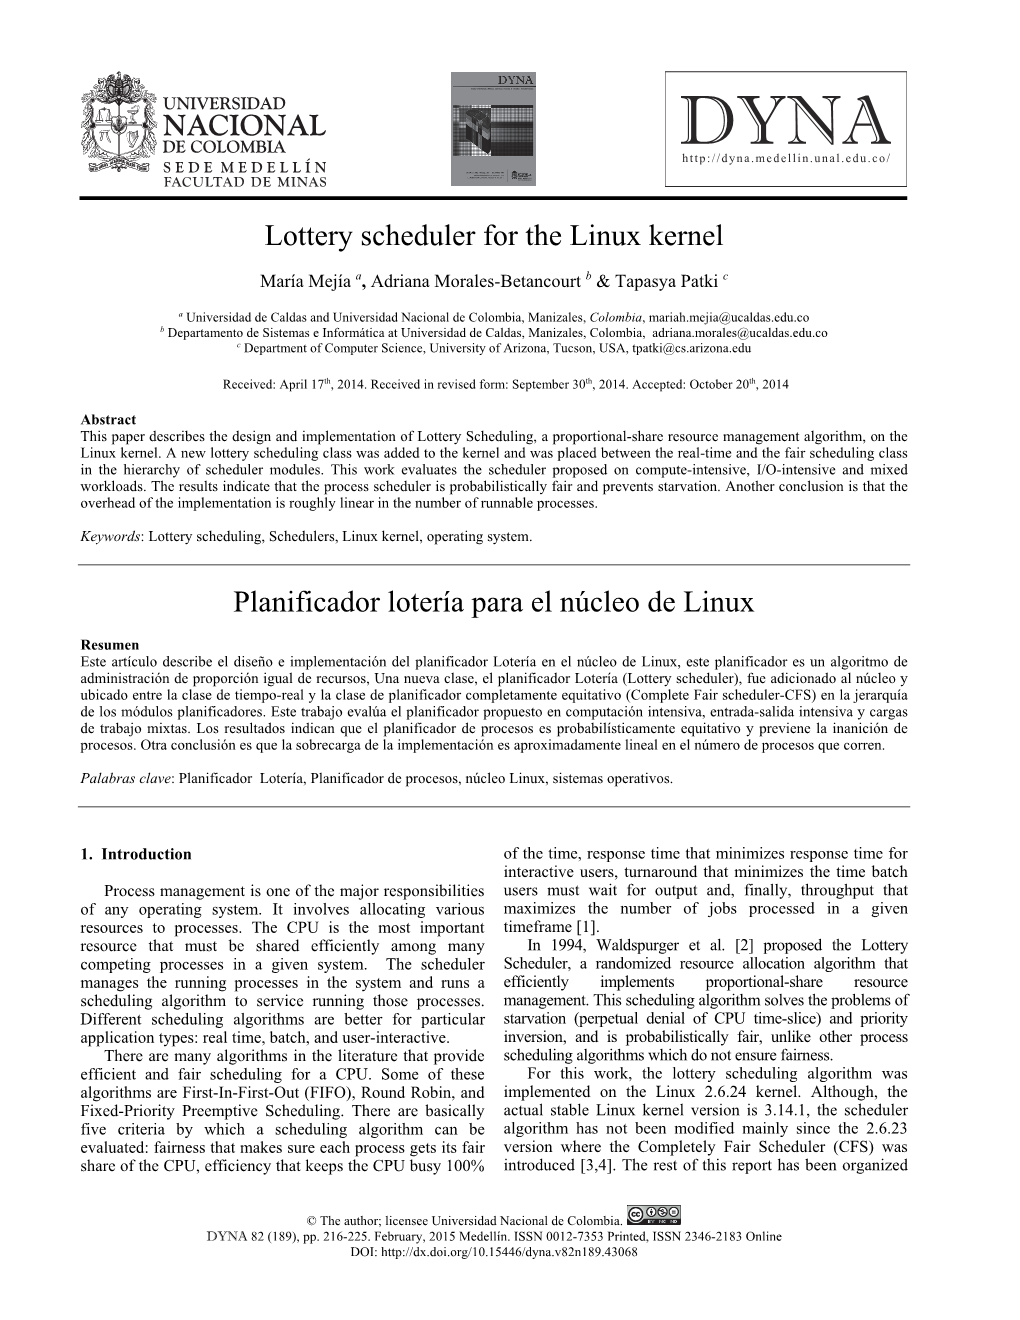 Lottery Scheduler for the Linux Kernel Planificador Lotería Para El Núcleo